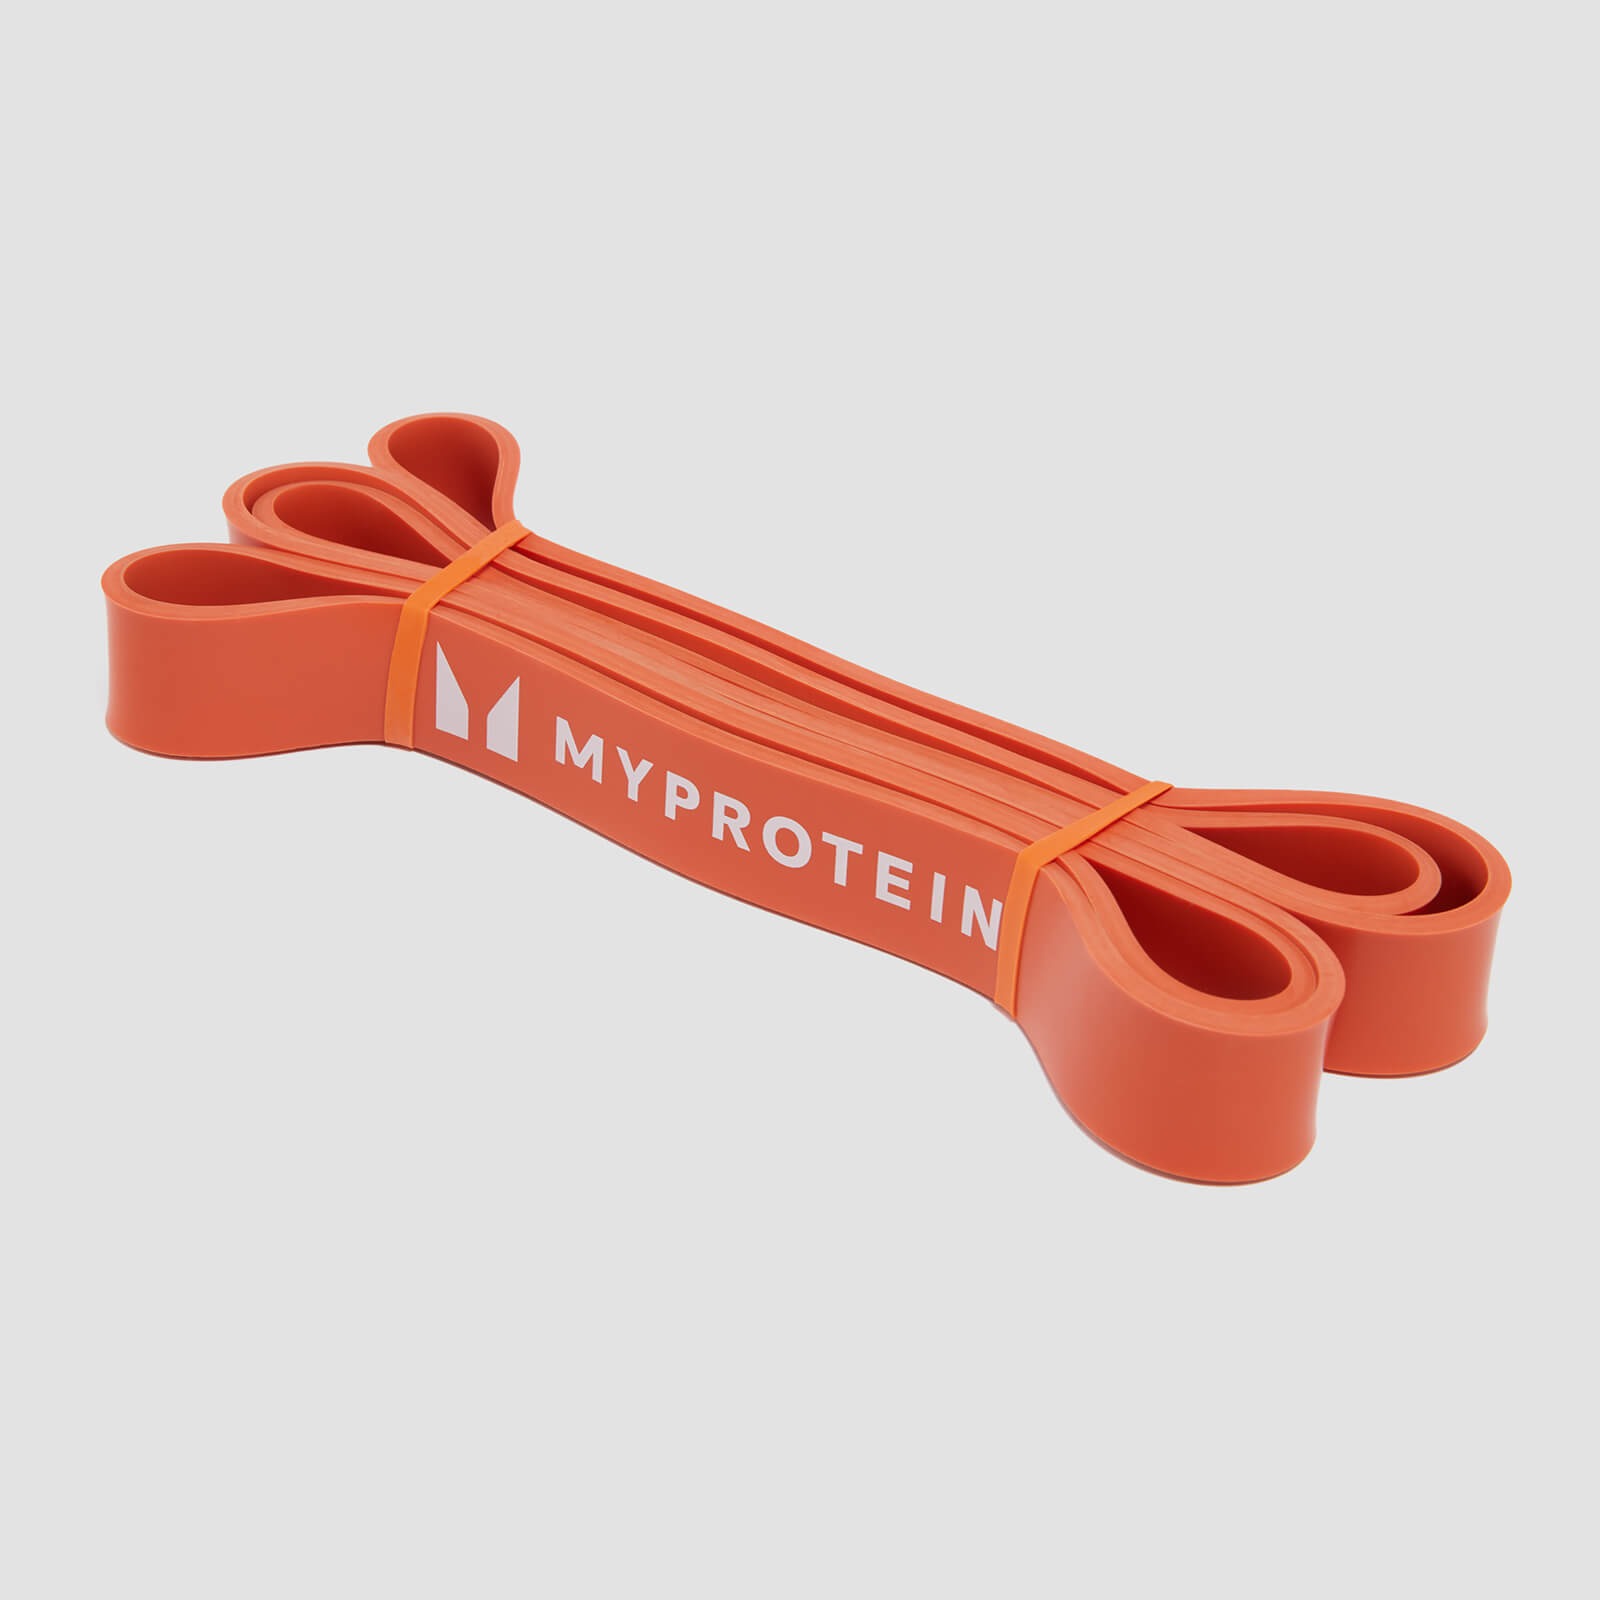 Myprotein rastezljive trake – pojedinačna traka (11-36kg) – Burnt Orange